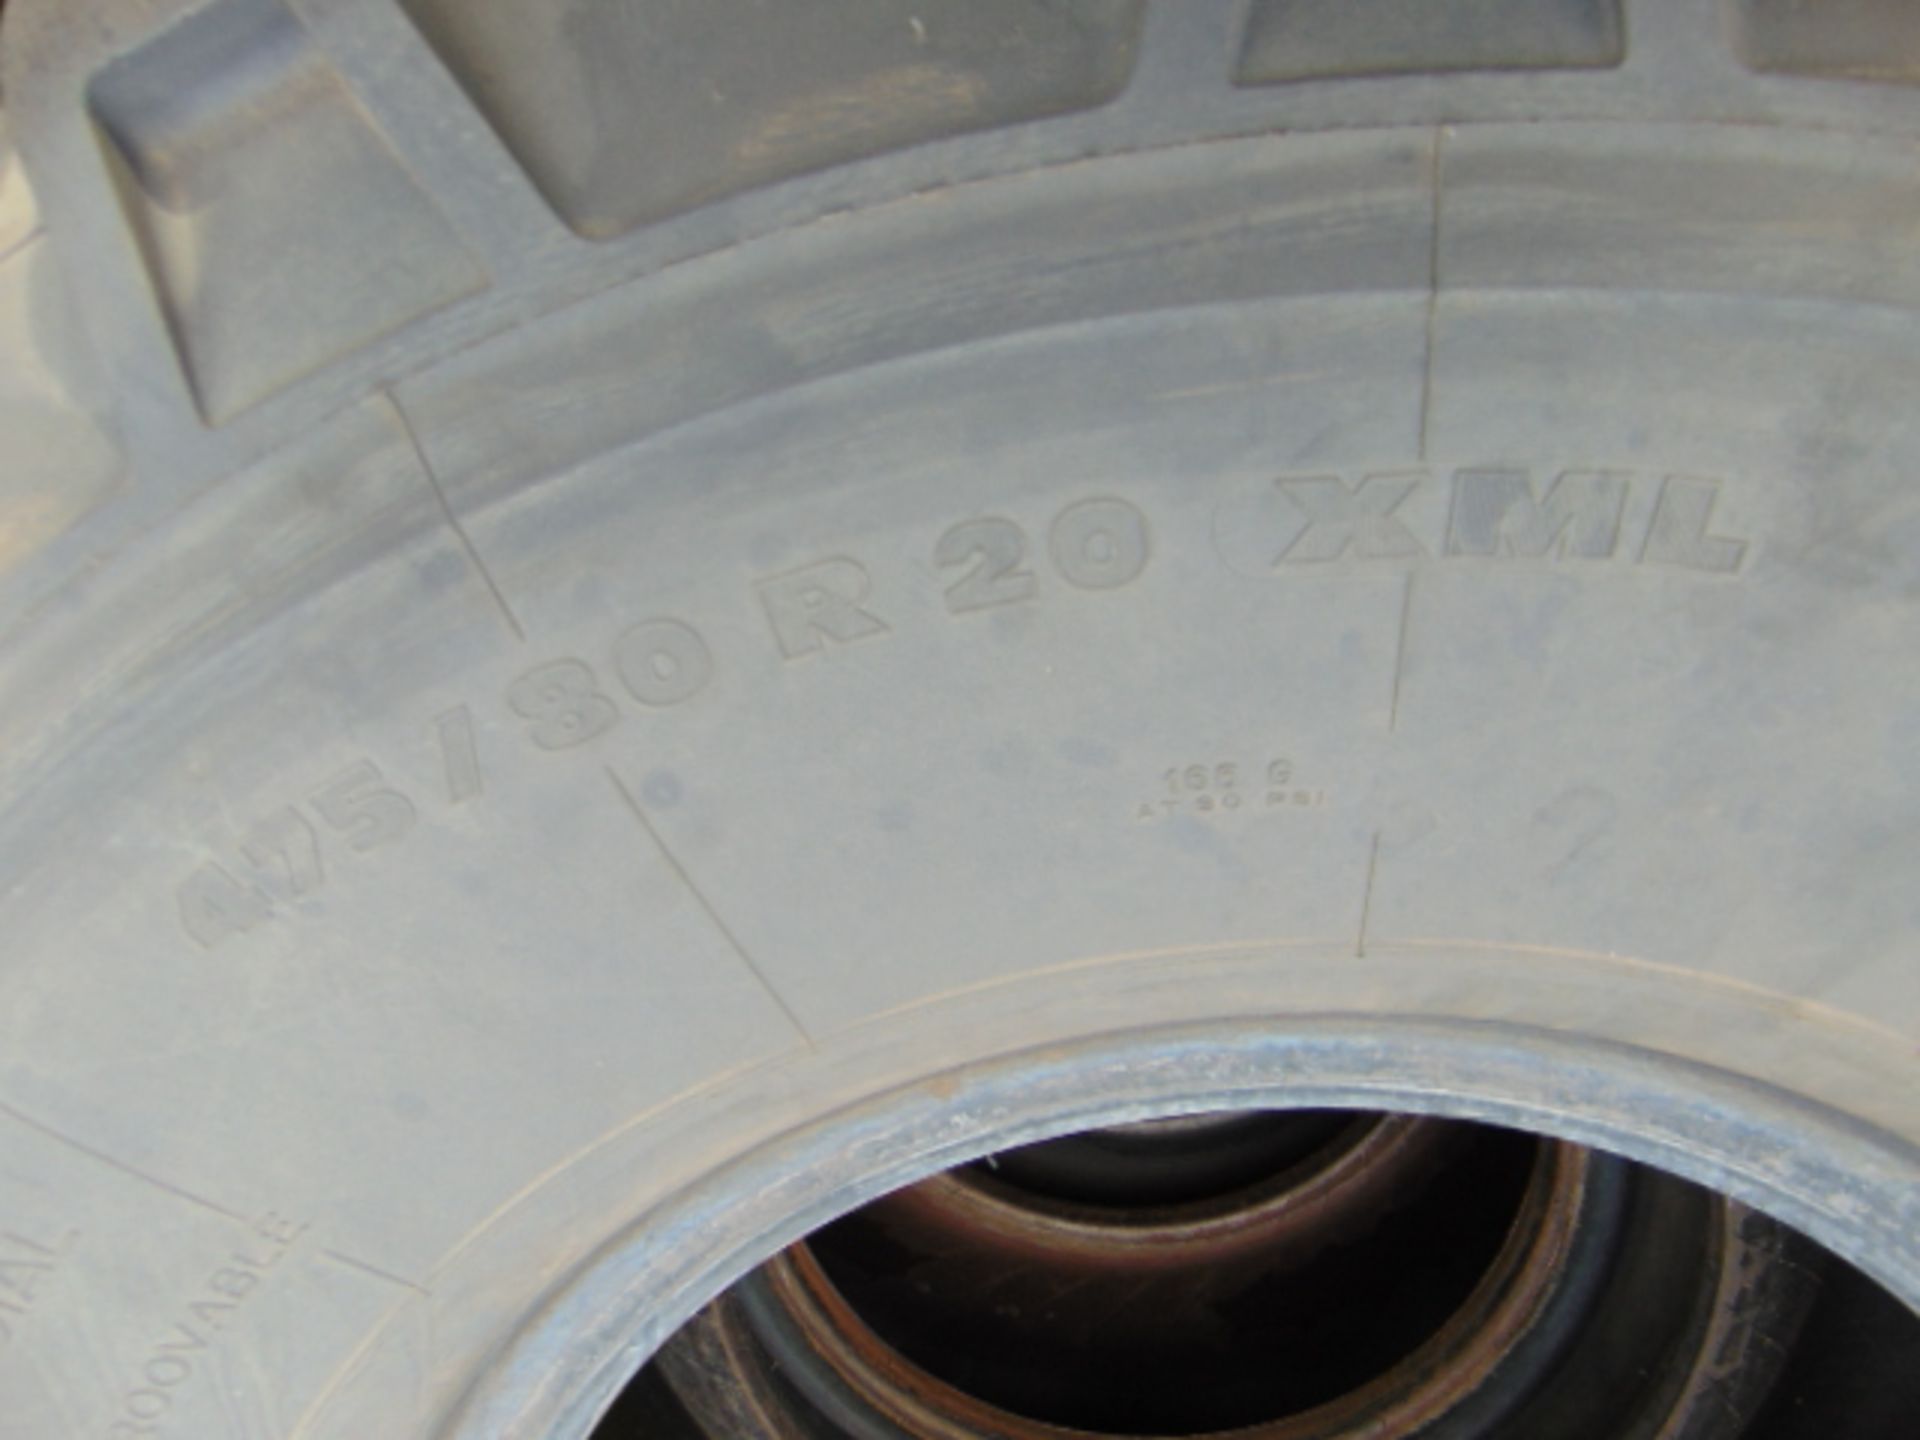 4 x Michelin XML 475/80 R20 Tyres - Image 6 of 6